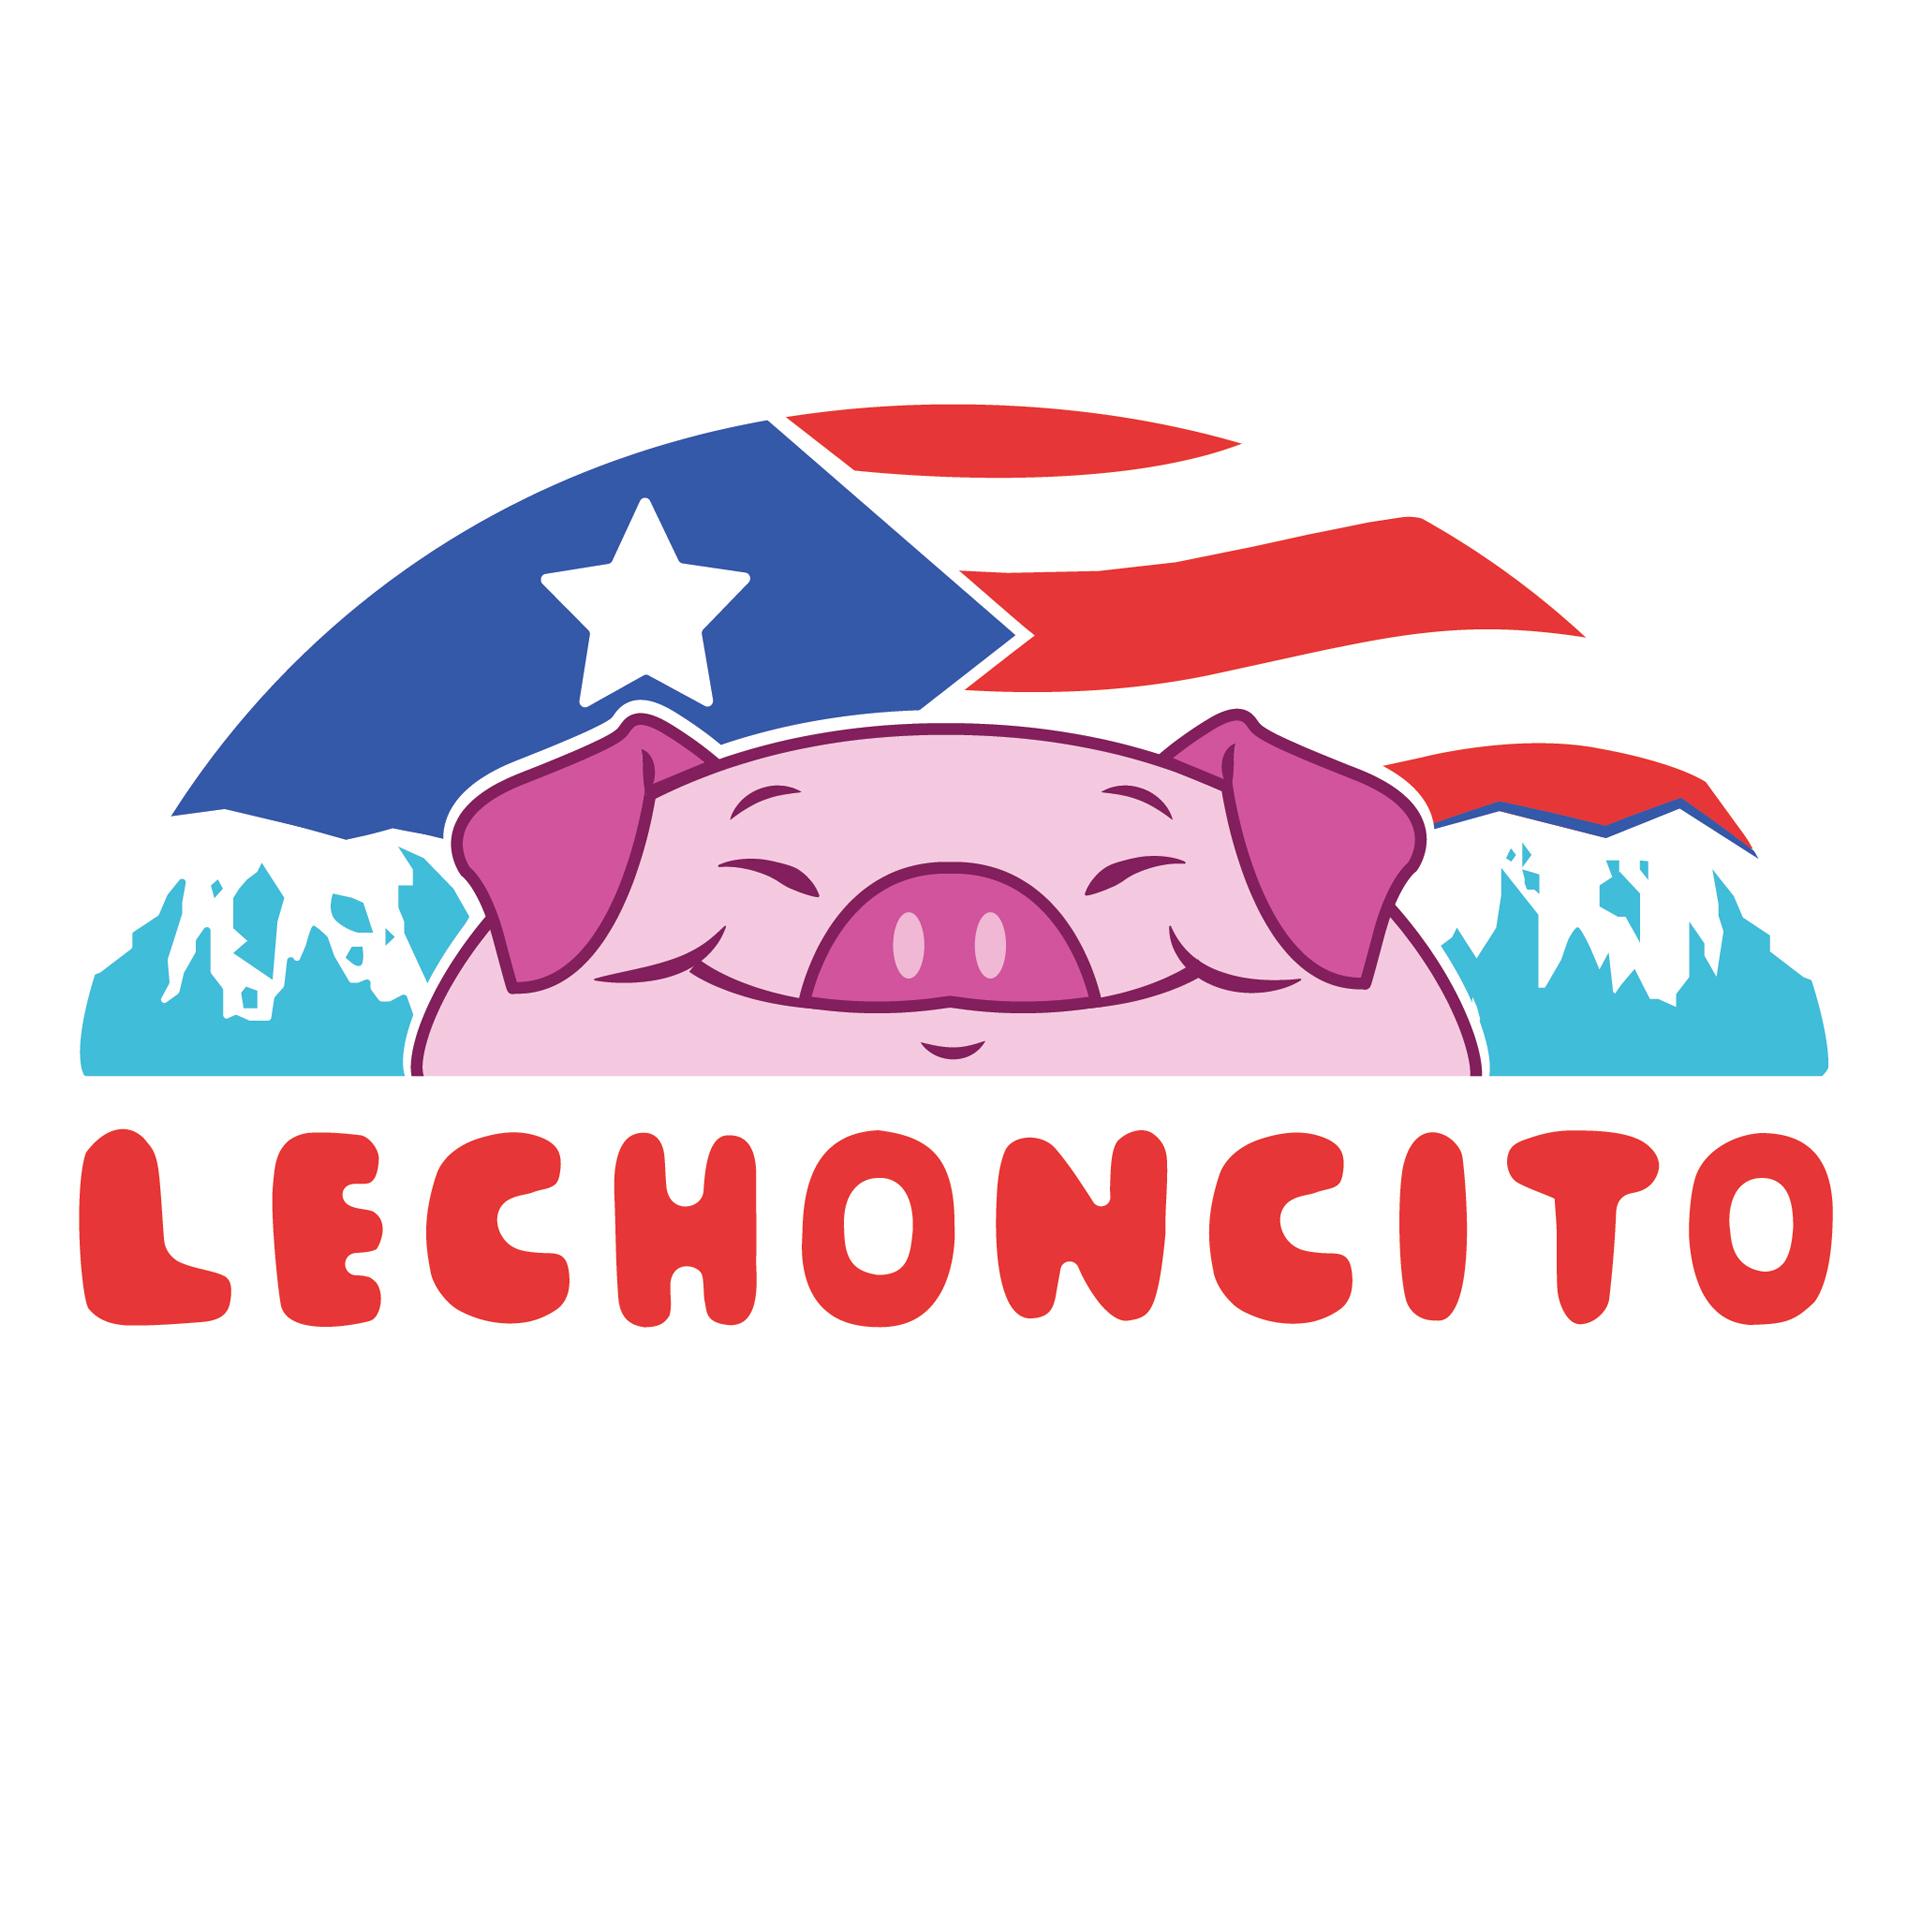 Lechoncito: Puerto Rican Food - November